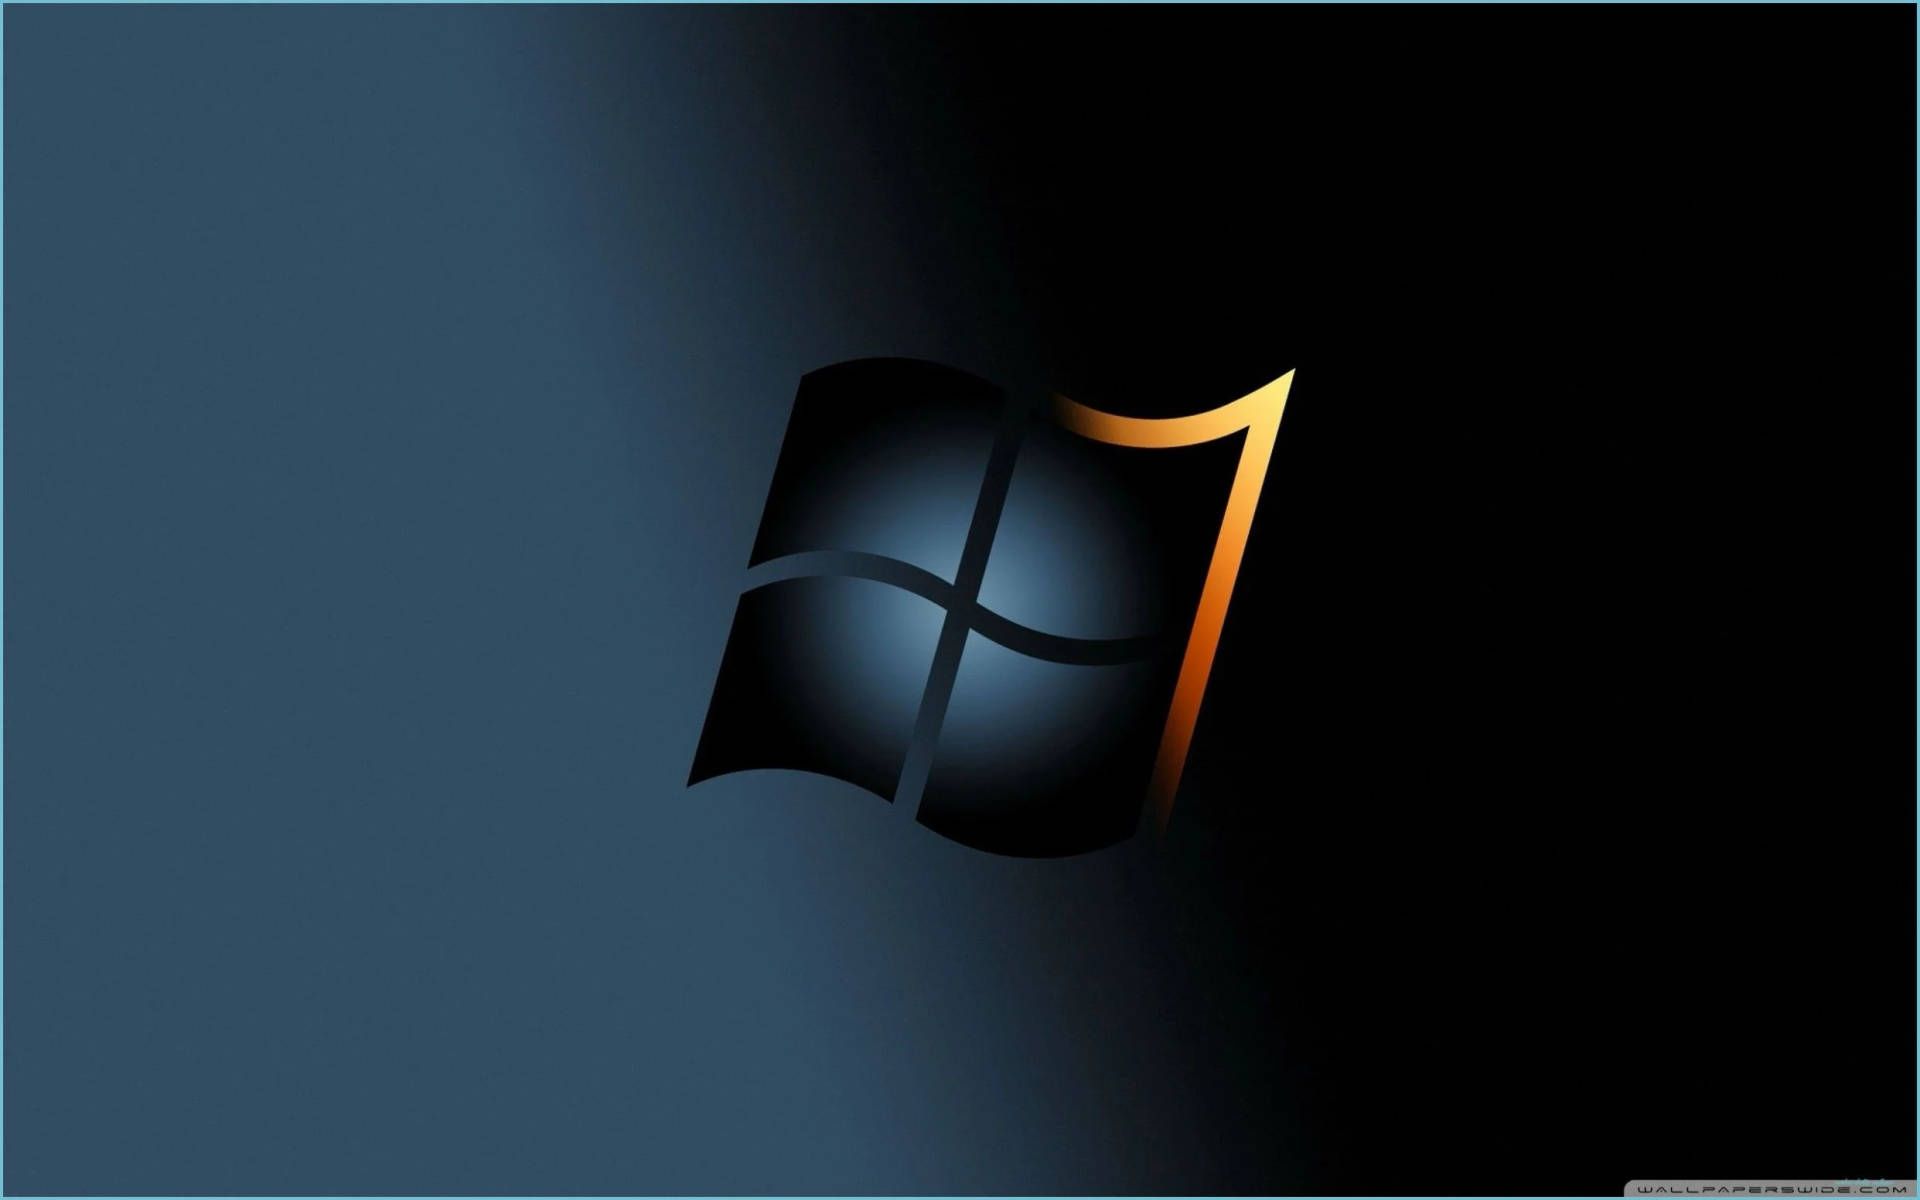 Free Windows 11 4k Wallpaper Downloads, Windows 11 4k Wallpaper for FREE